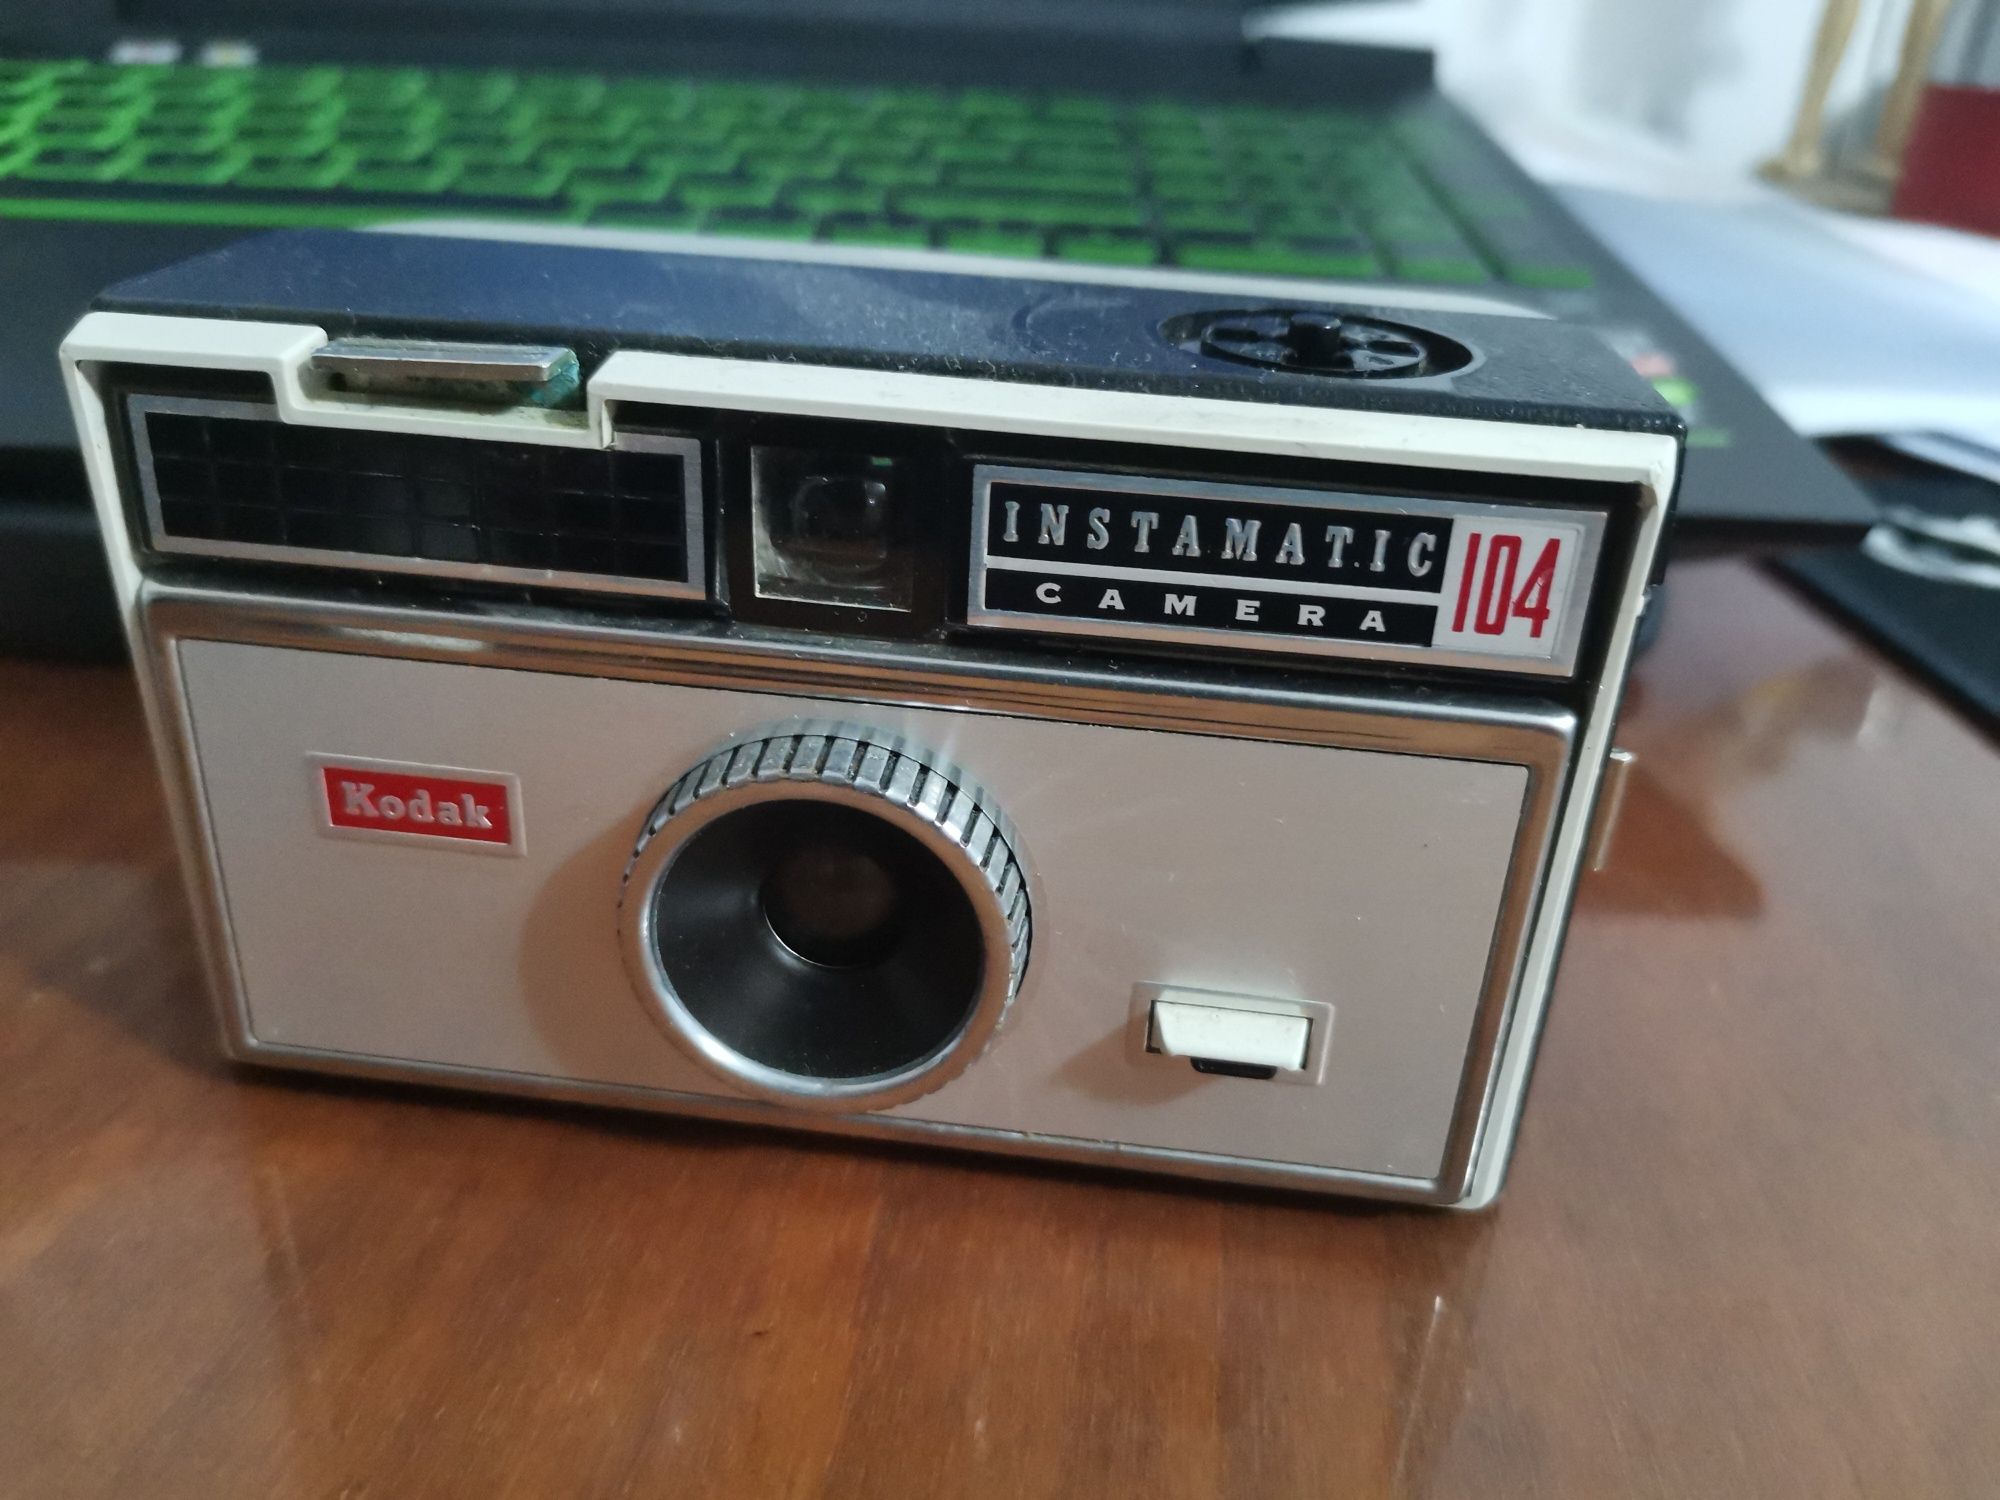 Instamatic camera 104